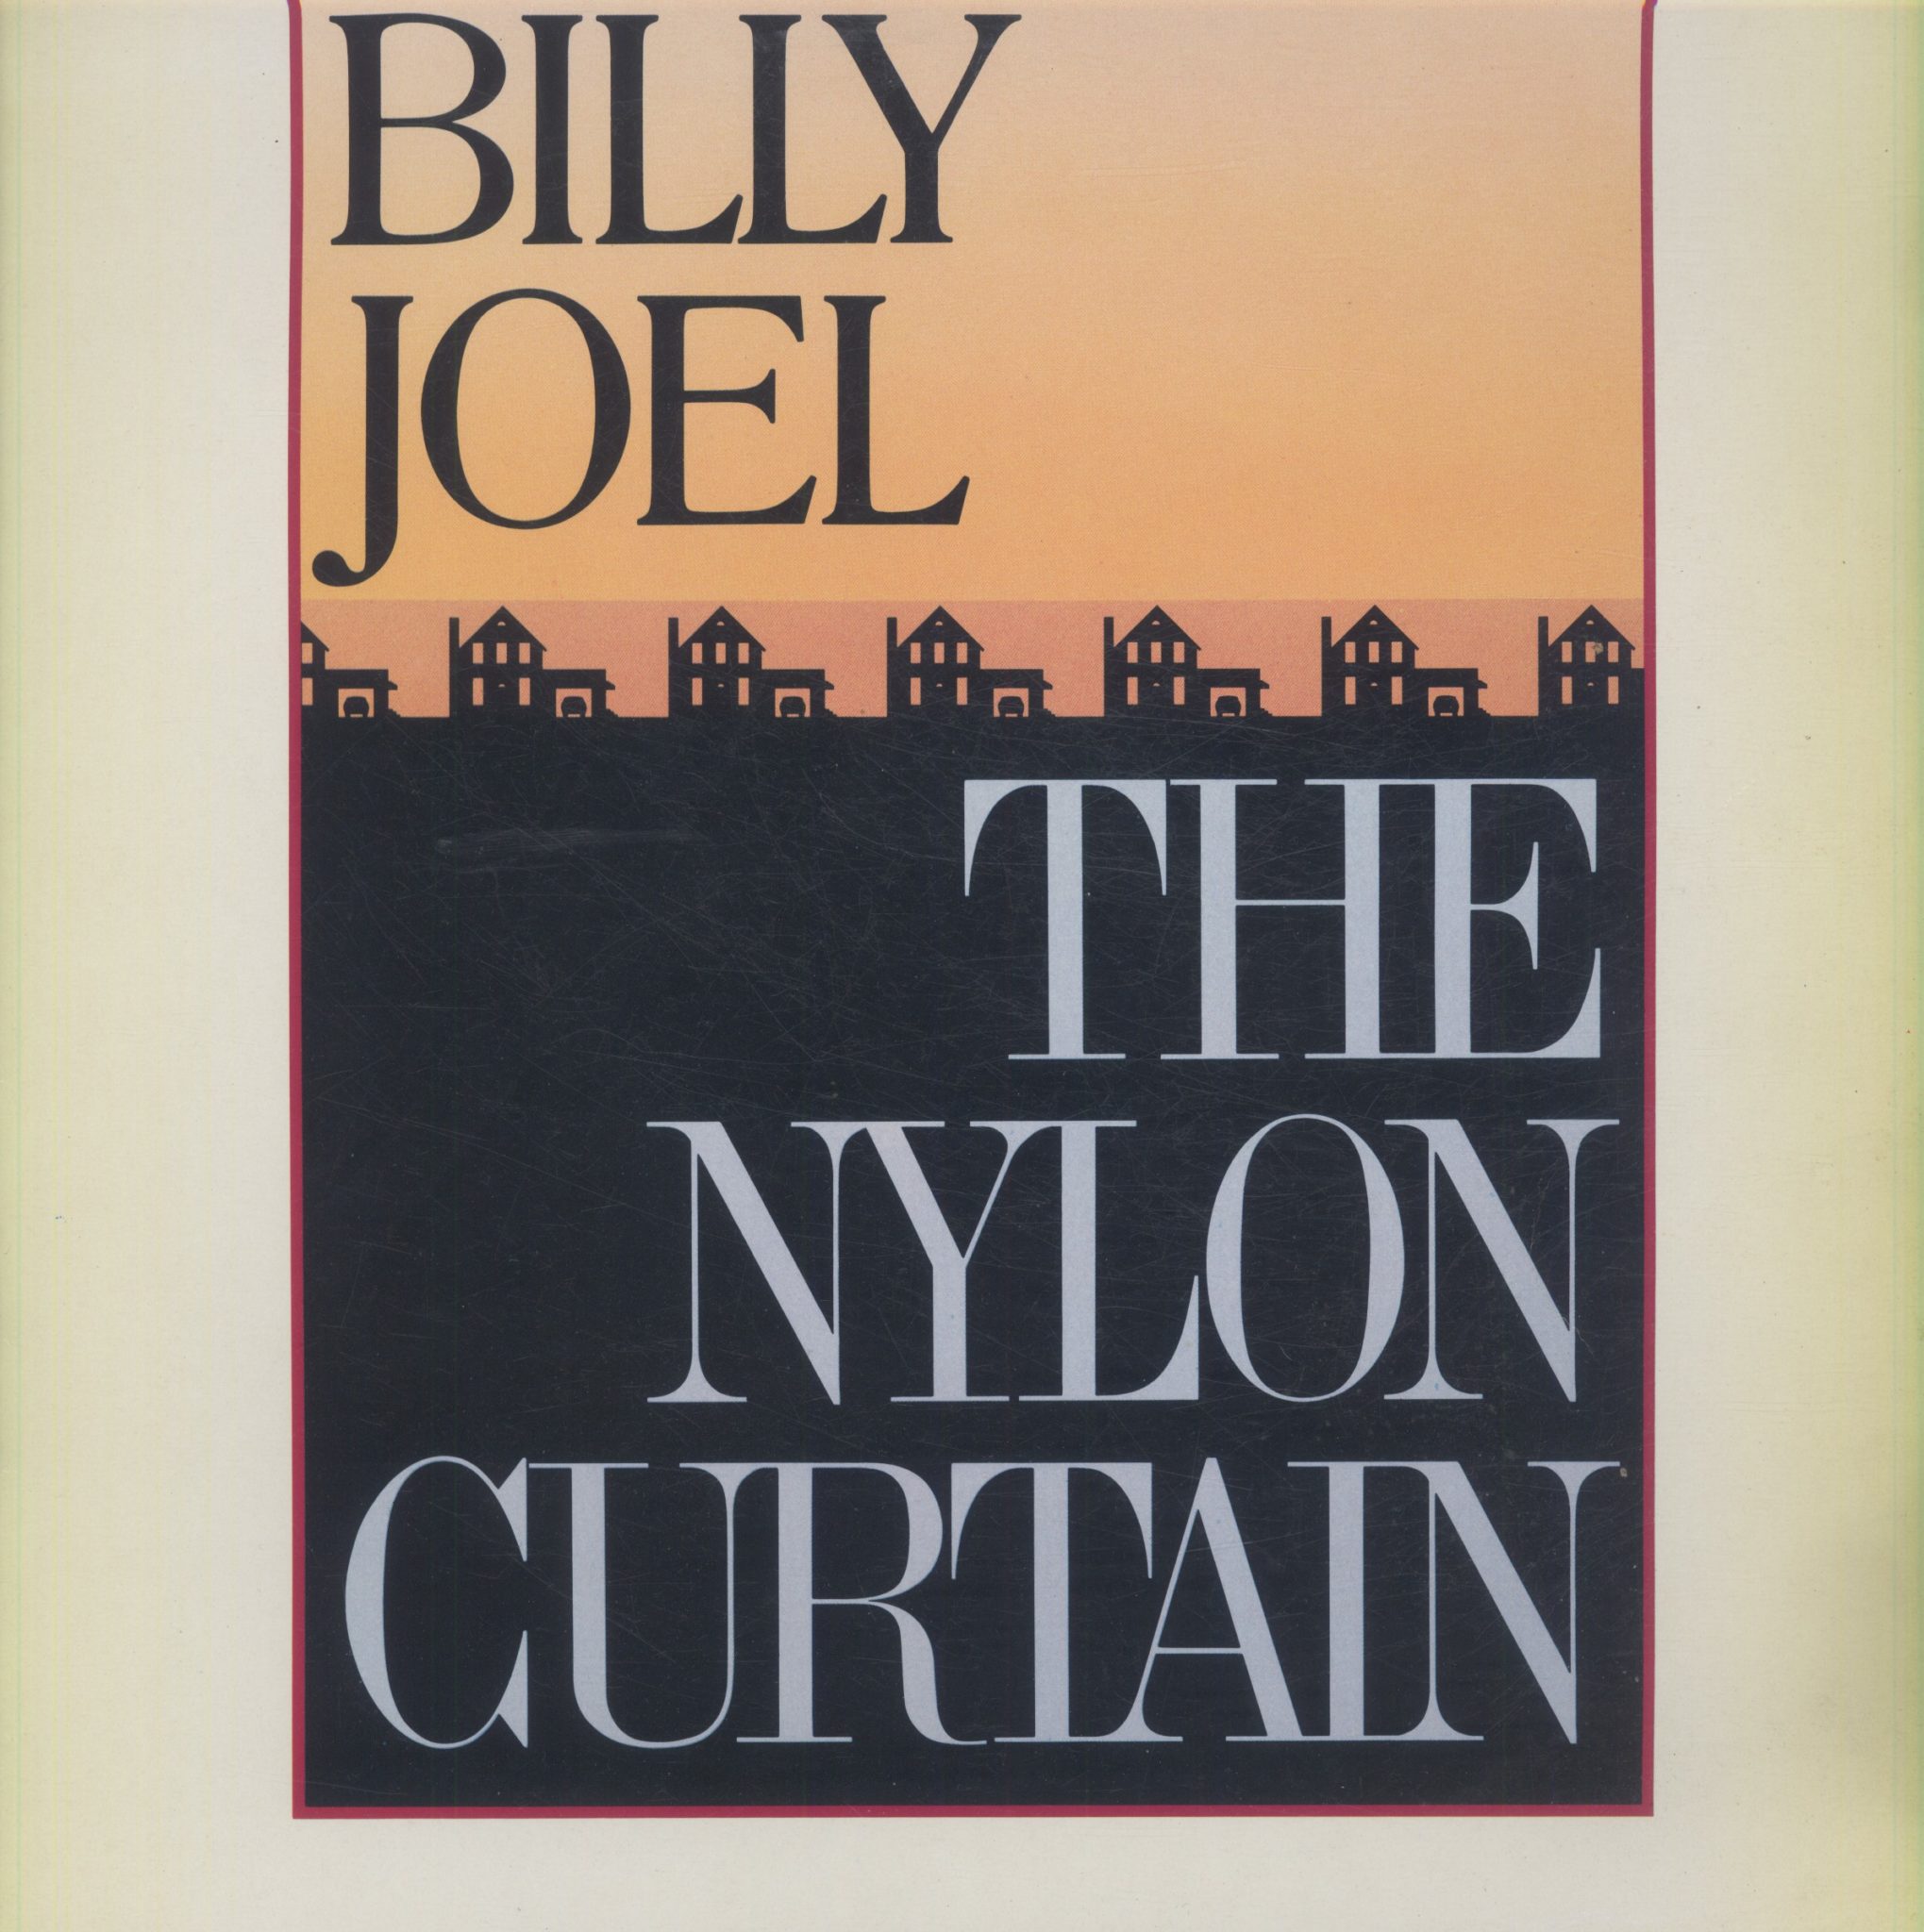 Gramofonska ploča Billy Joel Nylon Curtain CX 85959